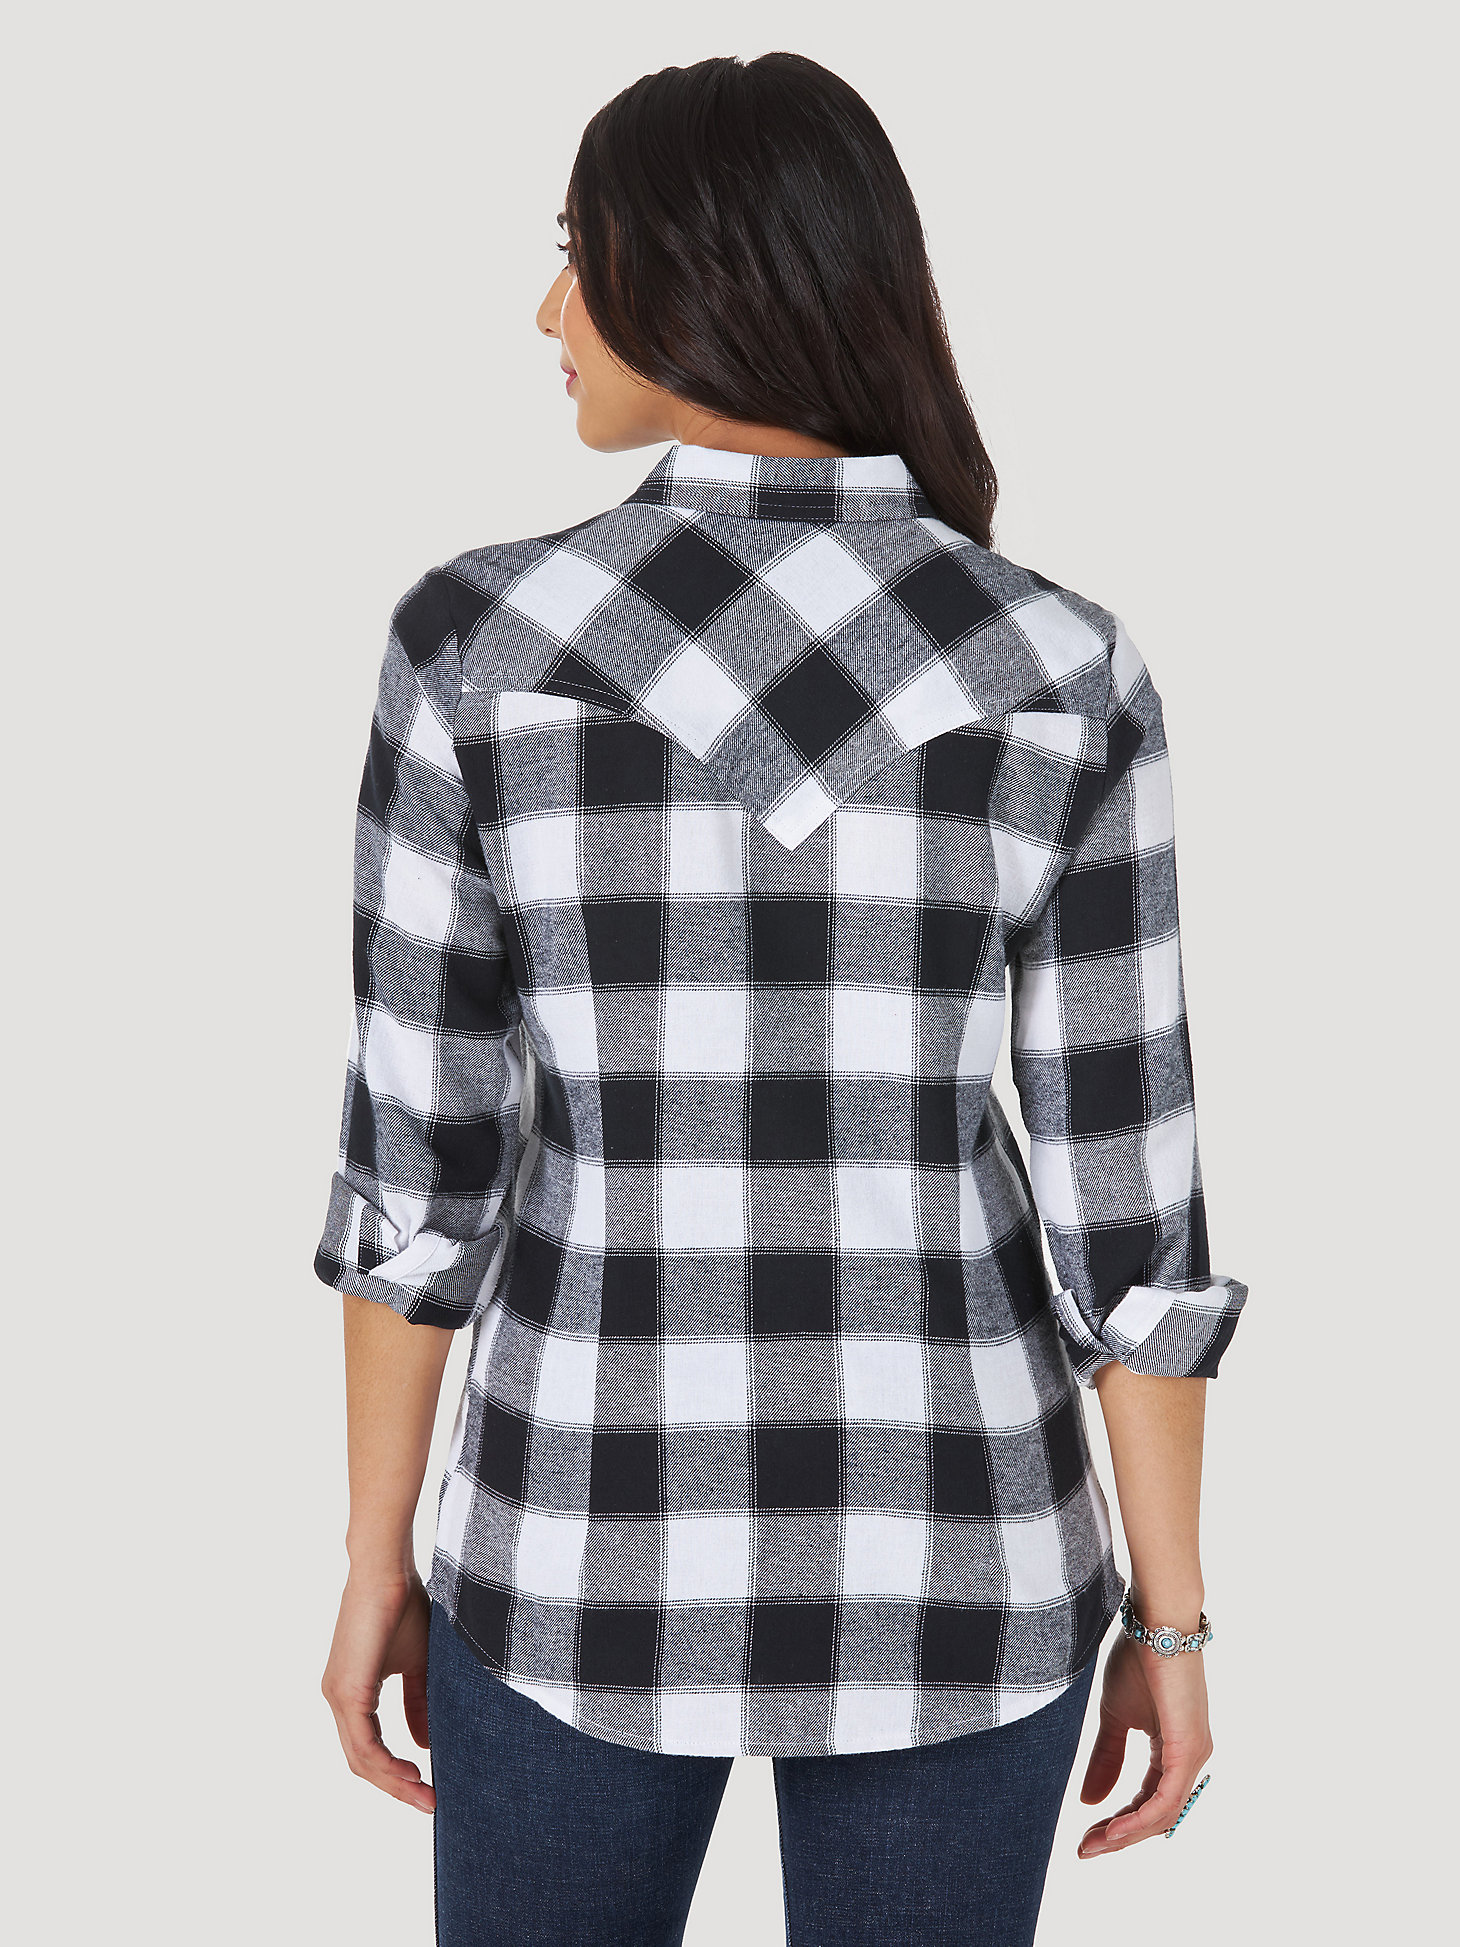 Women's Essential Long Sleeve Flannel Plaid Western Snap Shirt in Black/White Multi alternative view 1